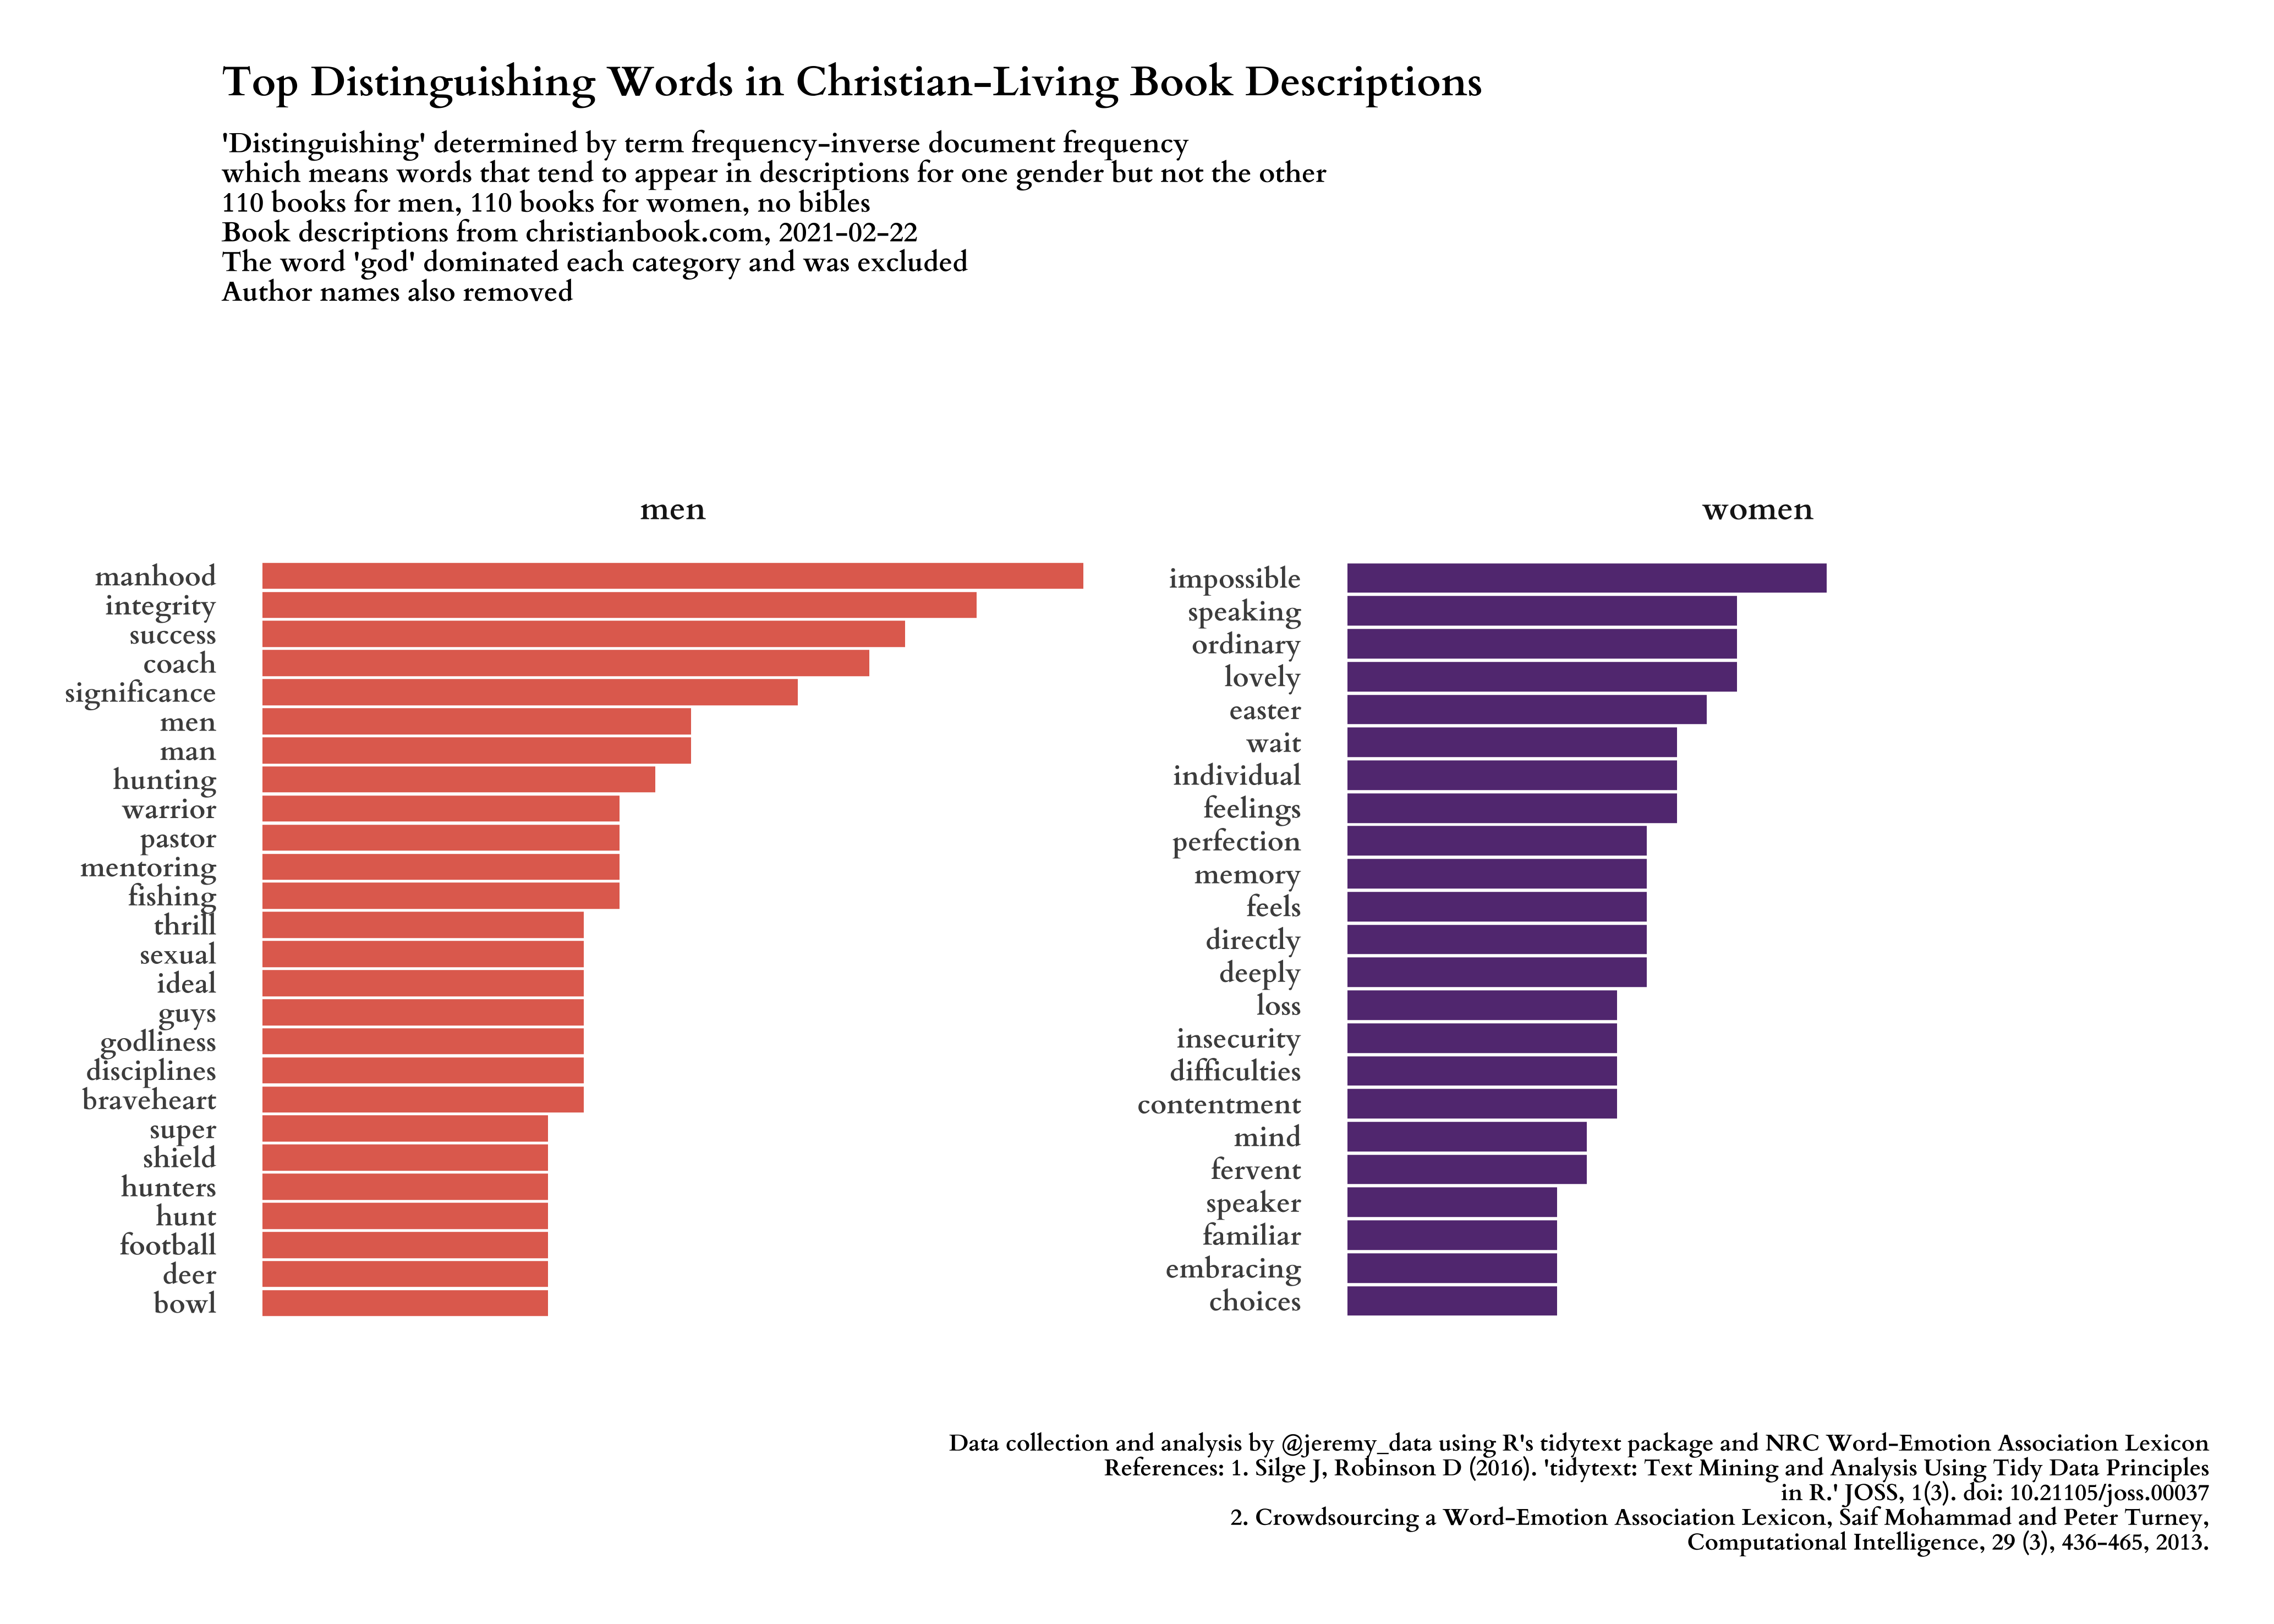 Top distinguishing words in men's and women's Christian-Living book descriptions